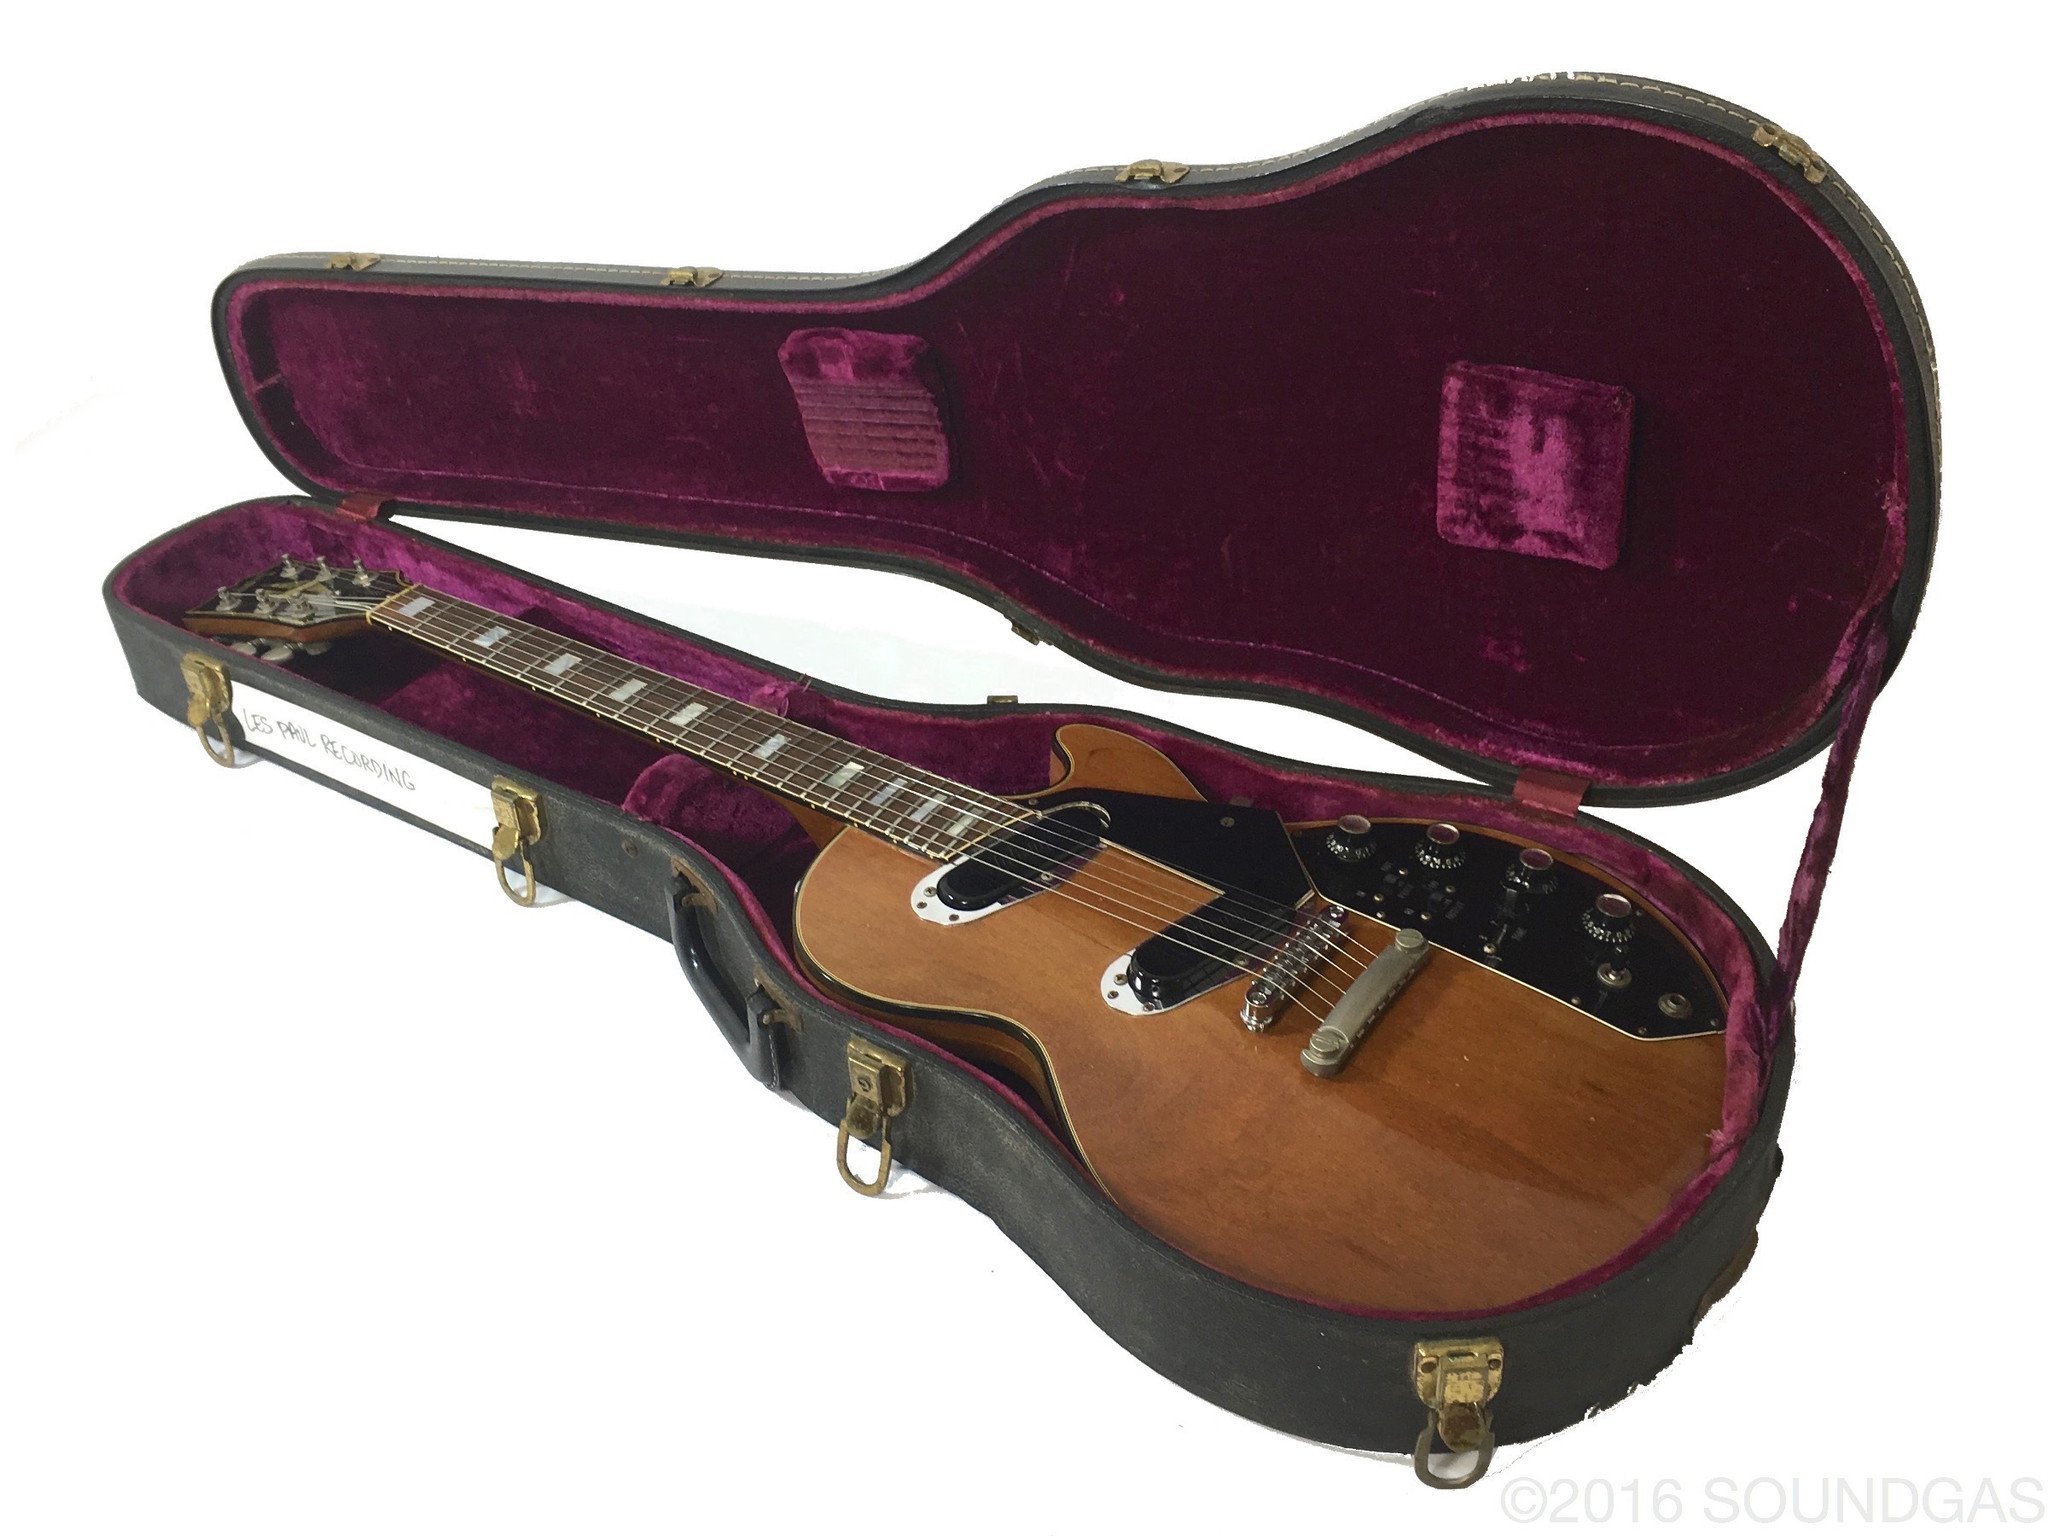 Gibson Les Paul Recording